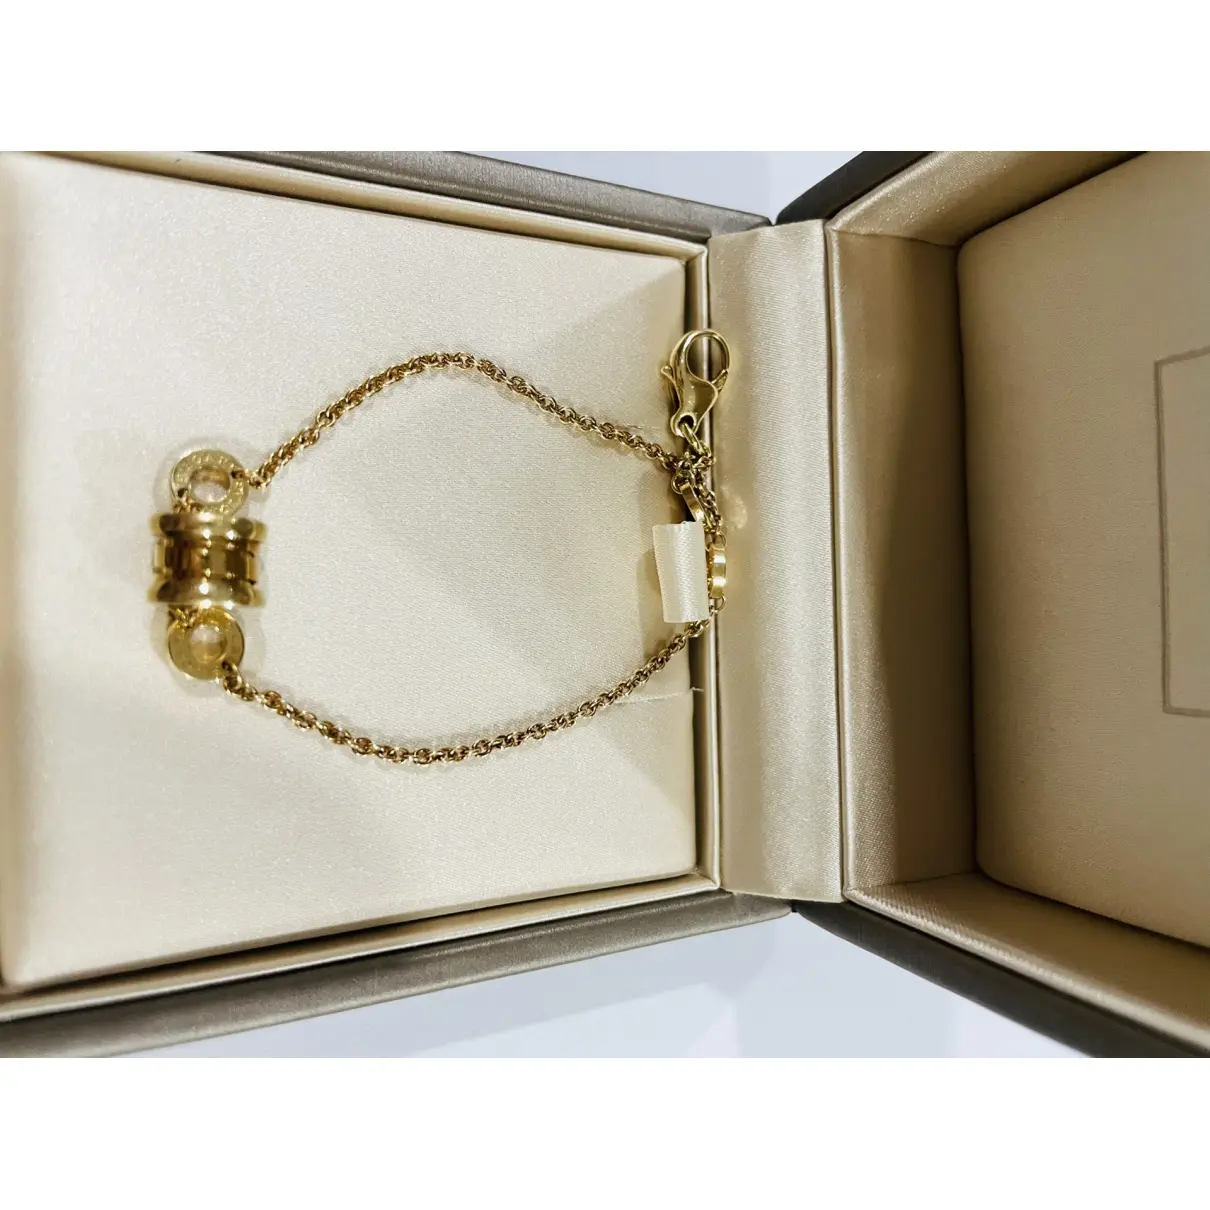 Buy Bvlgari B.Zero1 yellow gold bracelet online